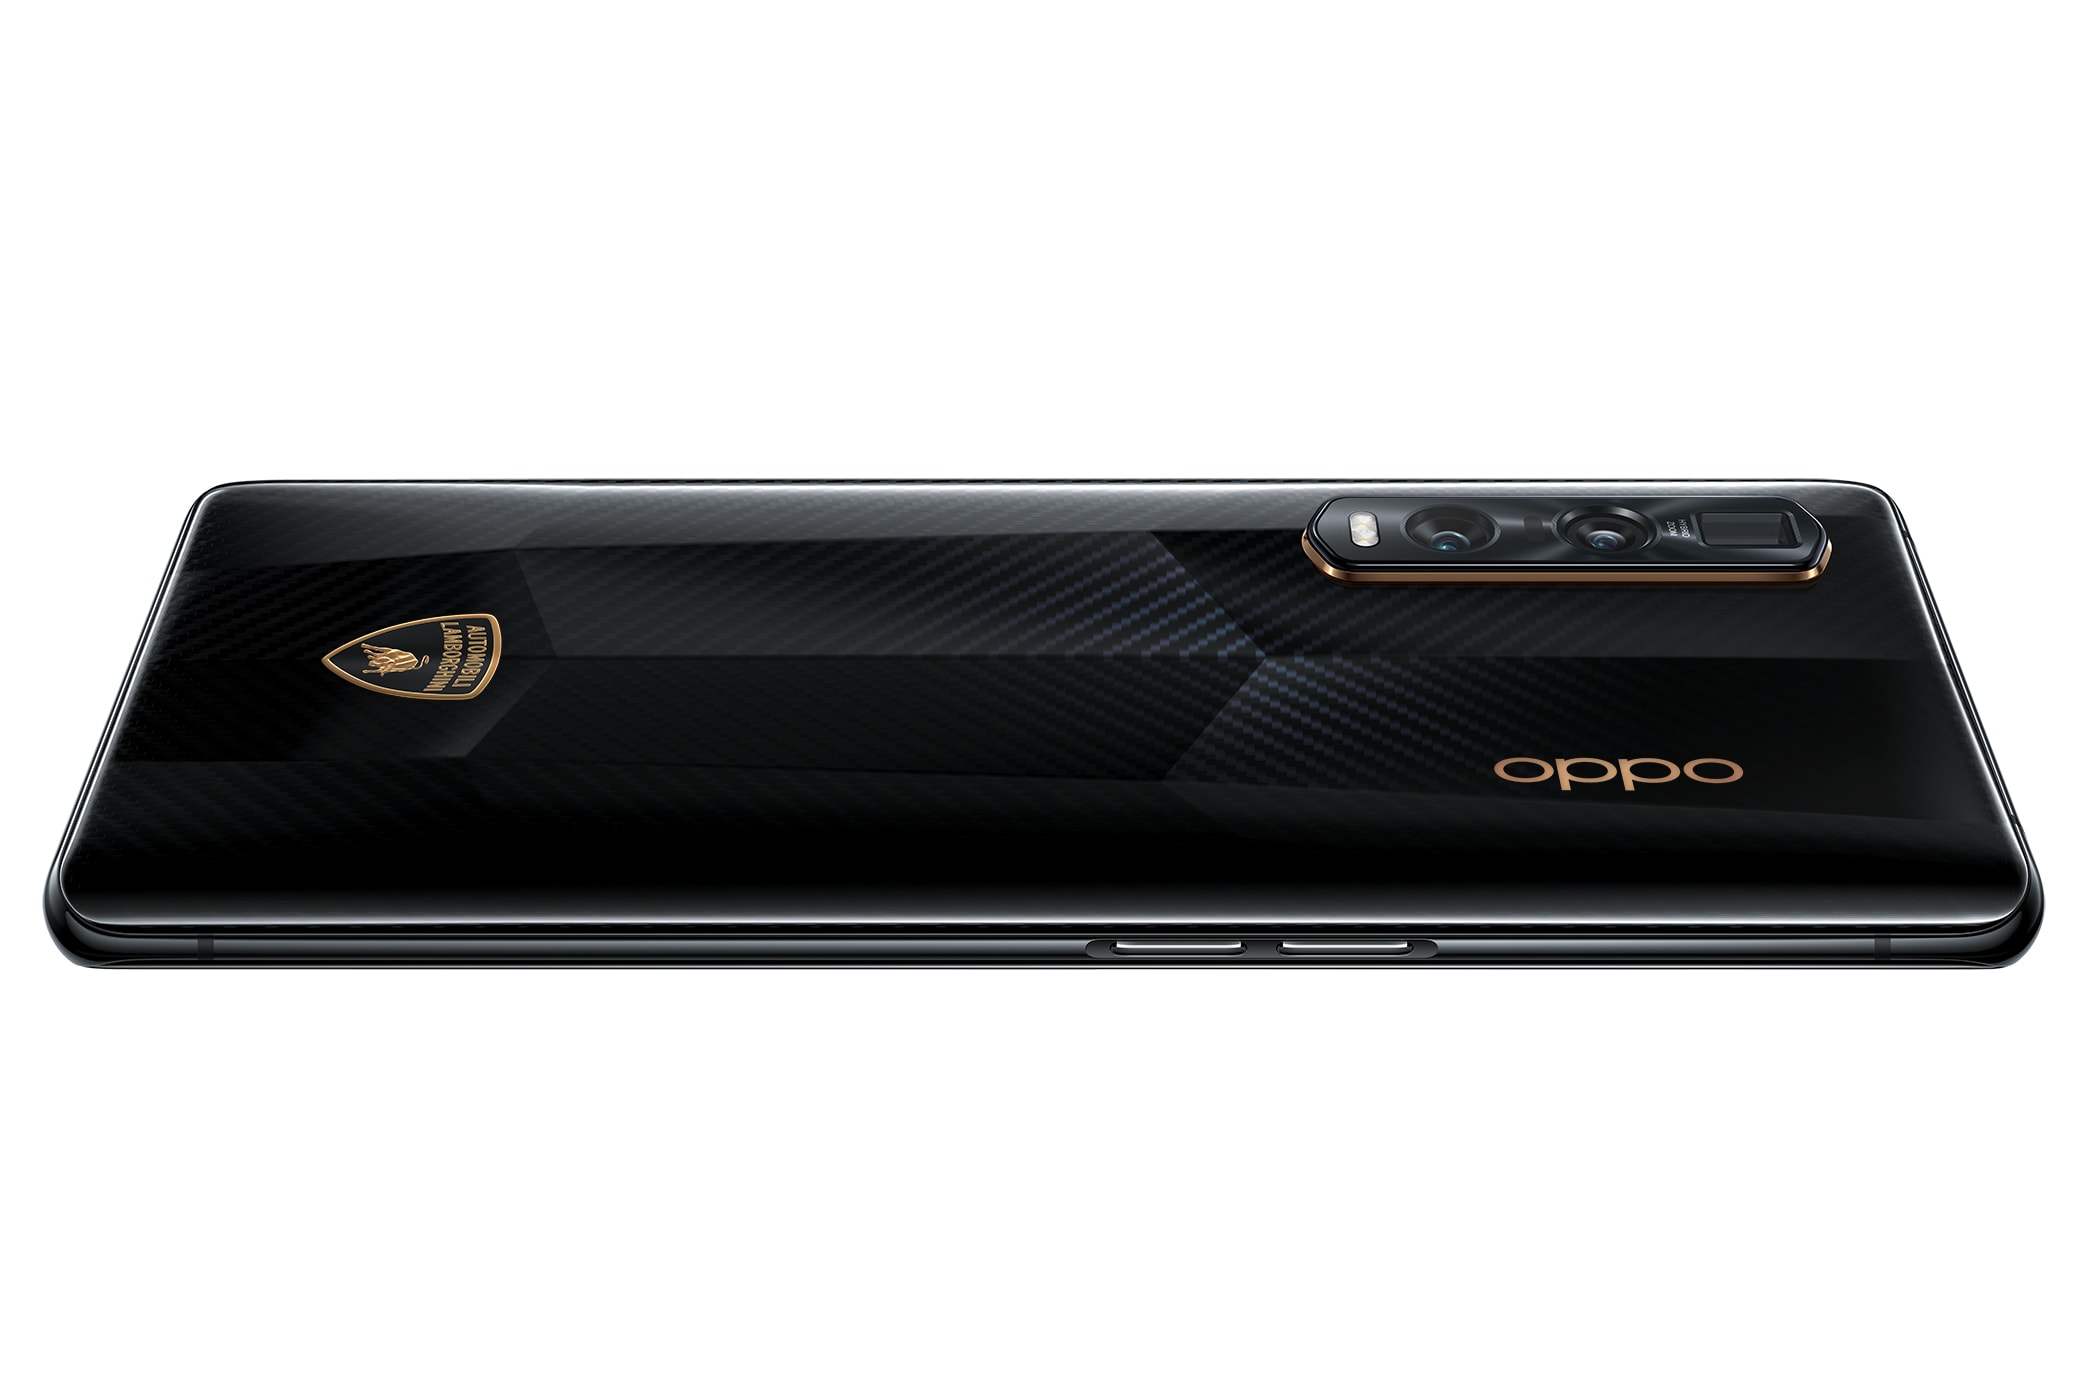 OPPO 正式发布 Find X2 系列，120 Hz 超感屏成就 5G 全能旗舰